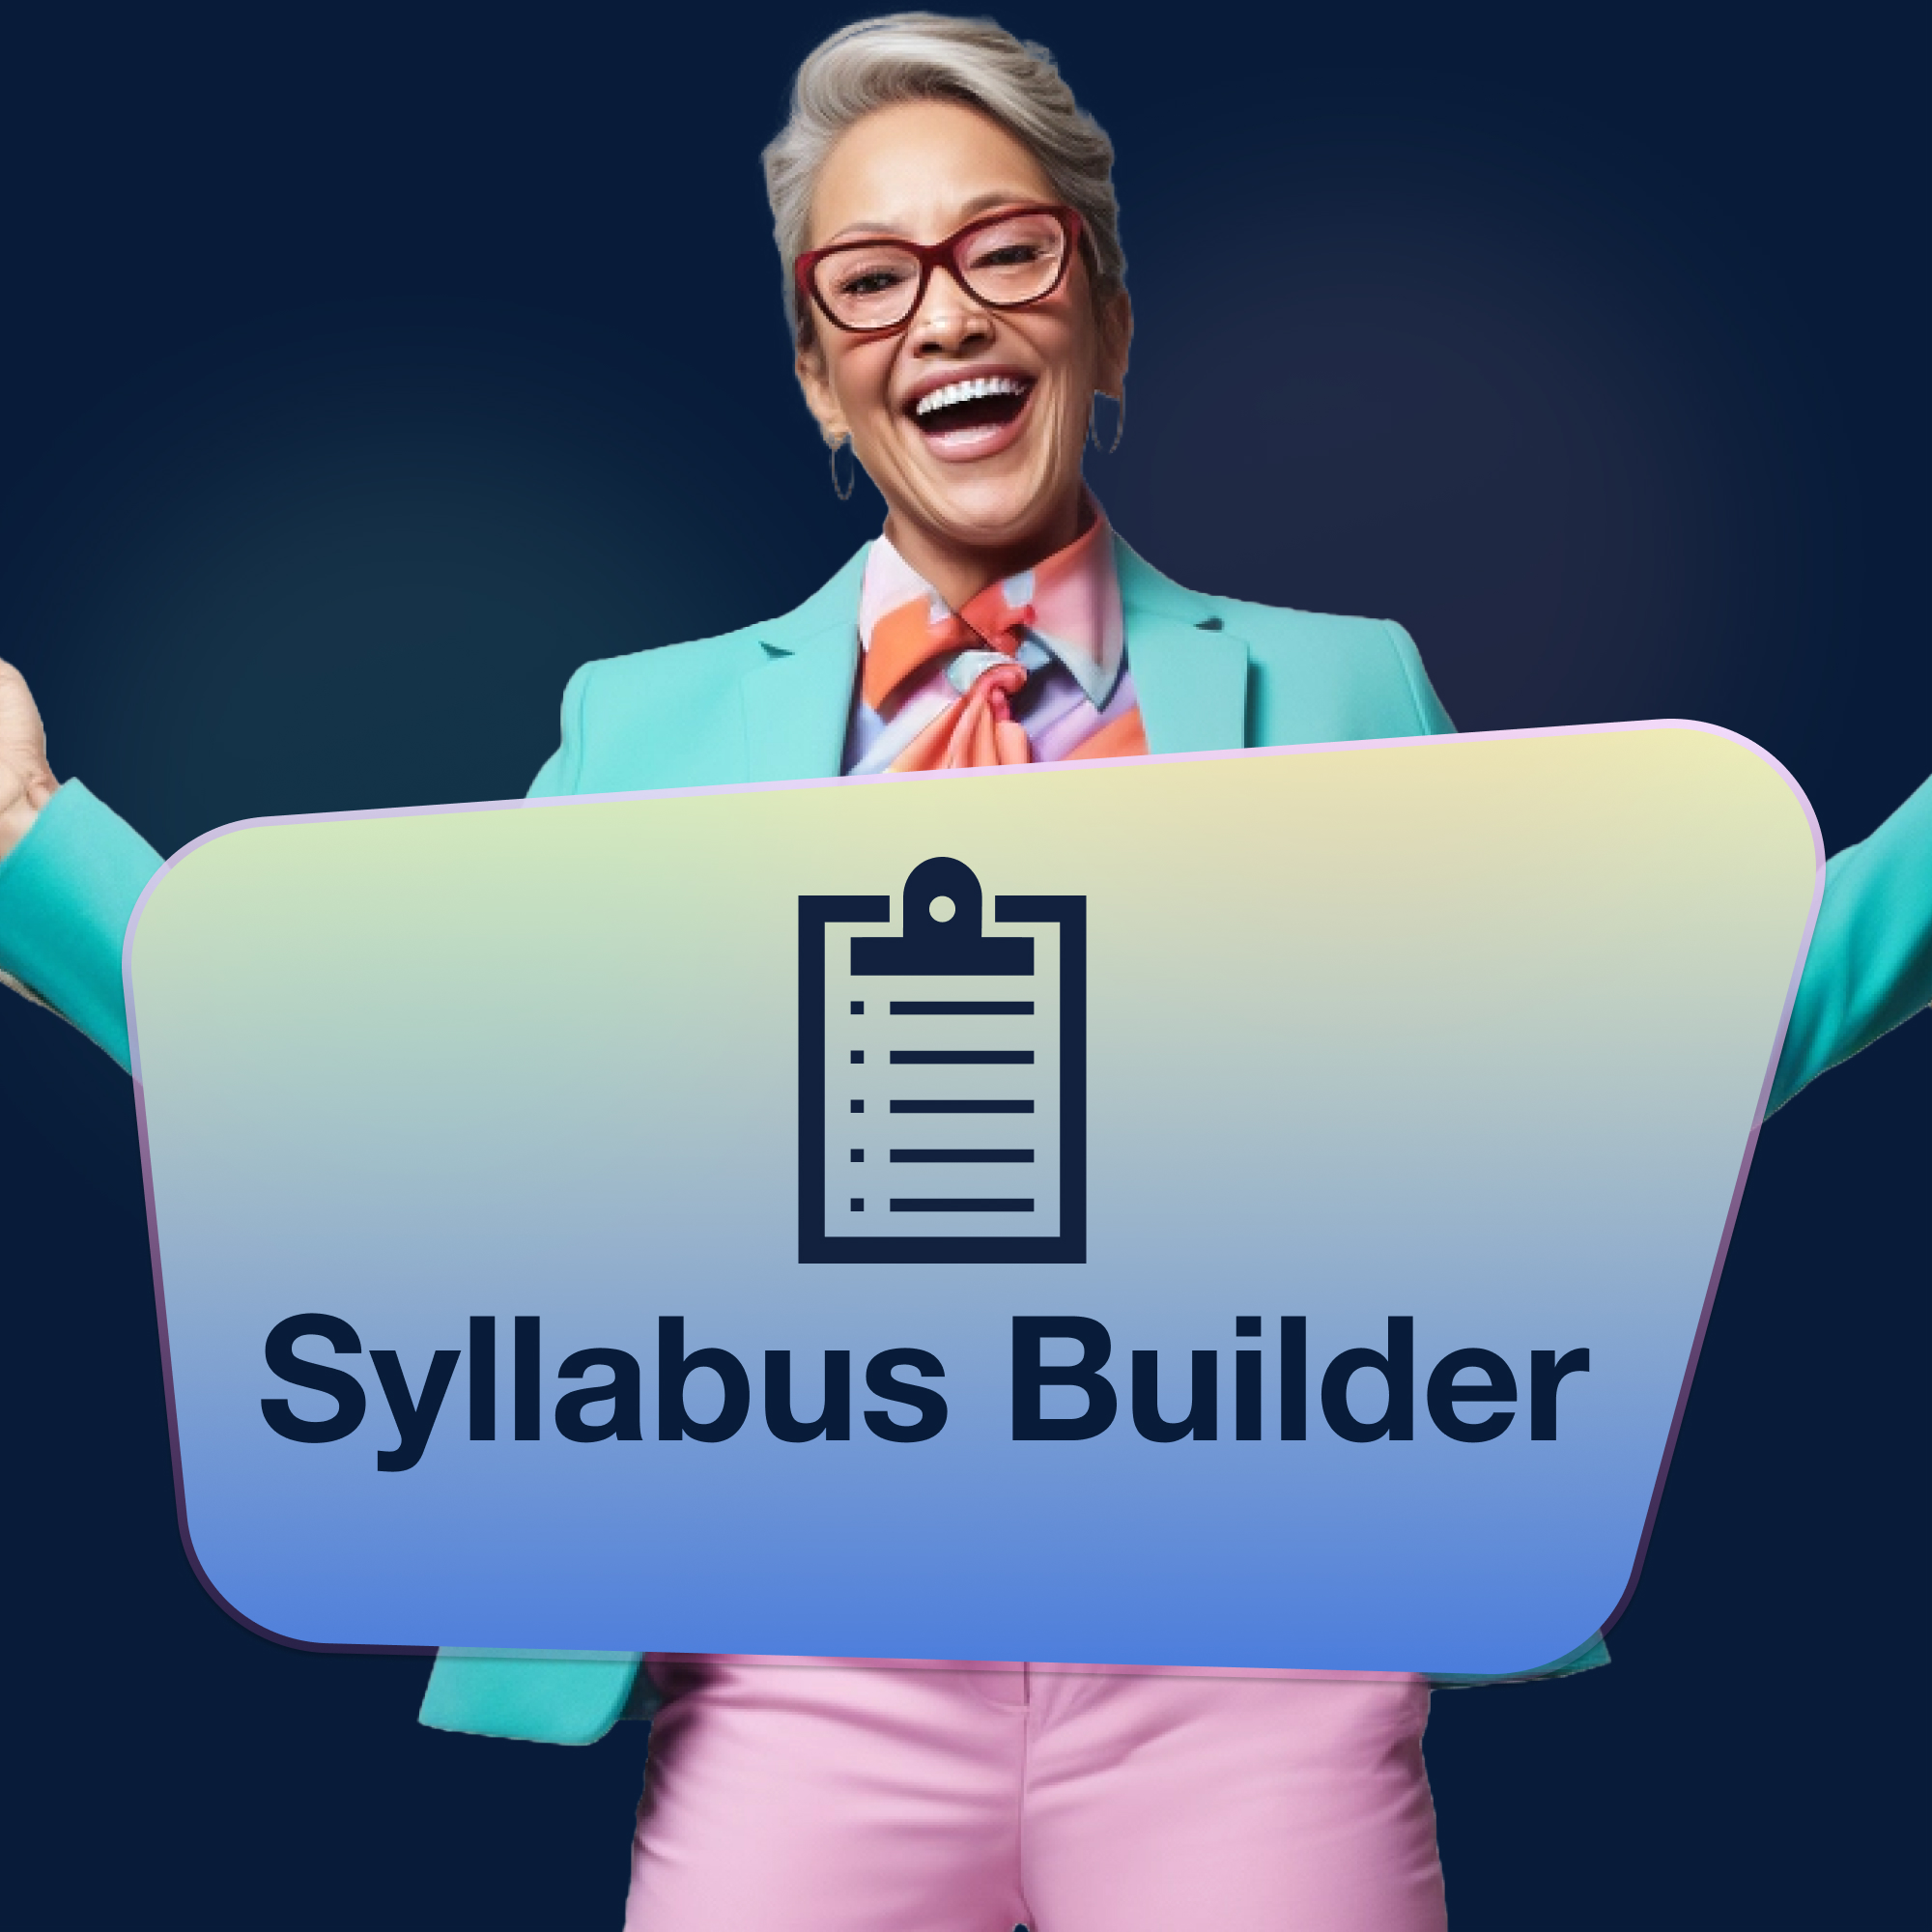 Syllabus Builder